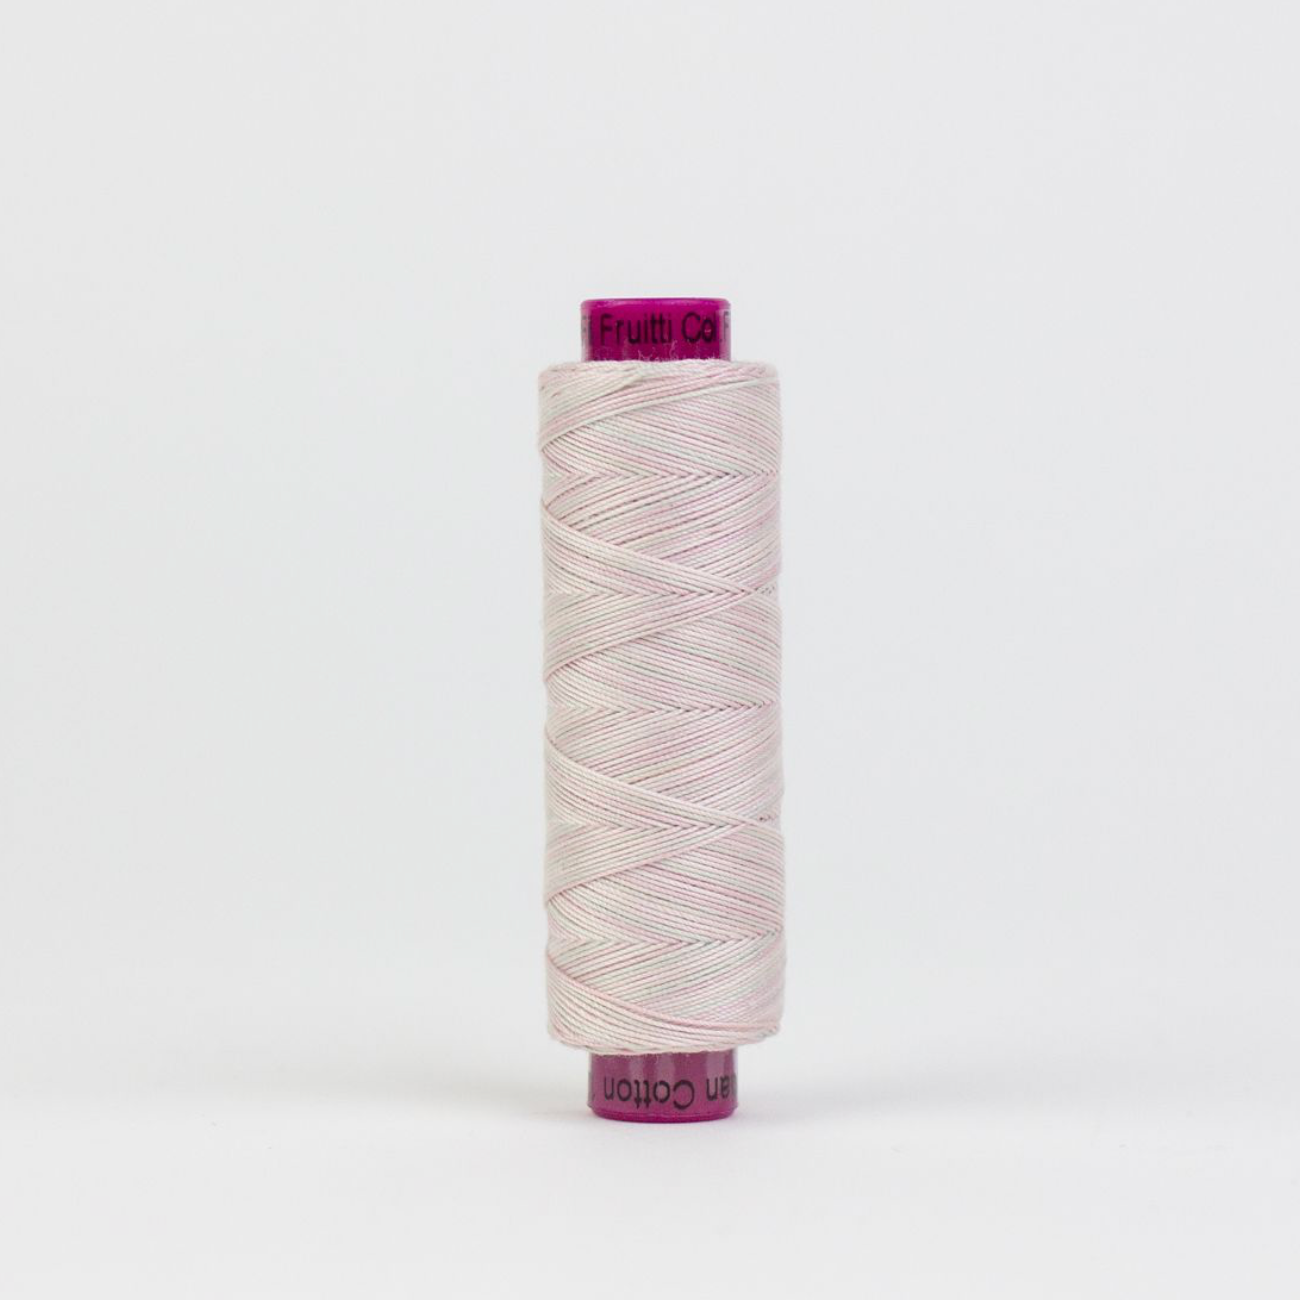 Fruitti 12wt Egyptian Cotton Thread - 109yd Spool - Shell FT-37